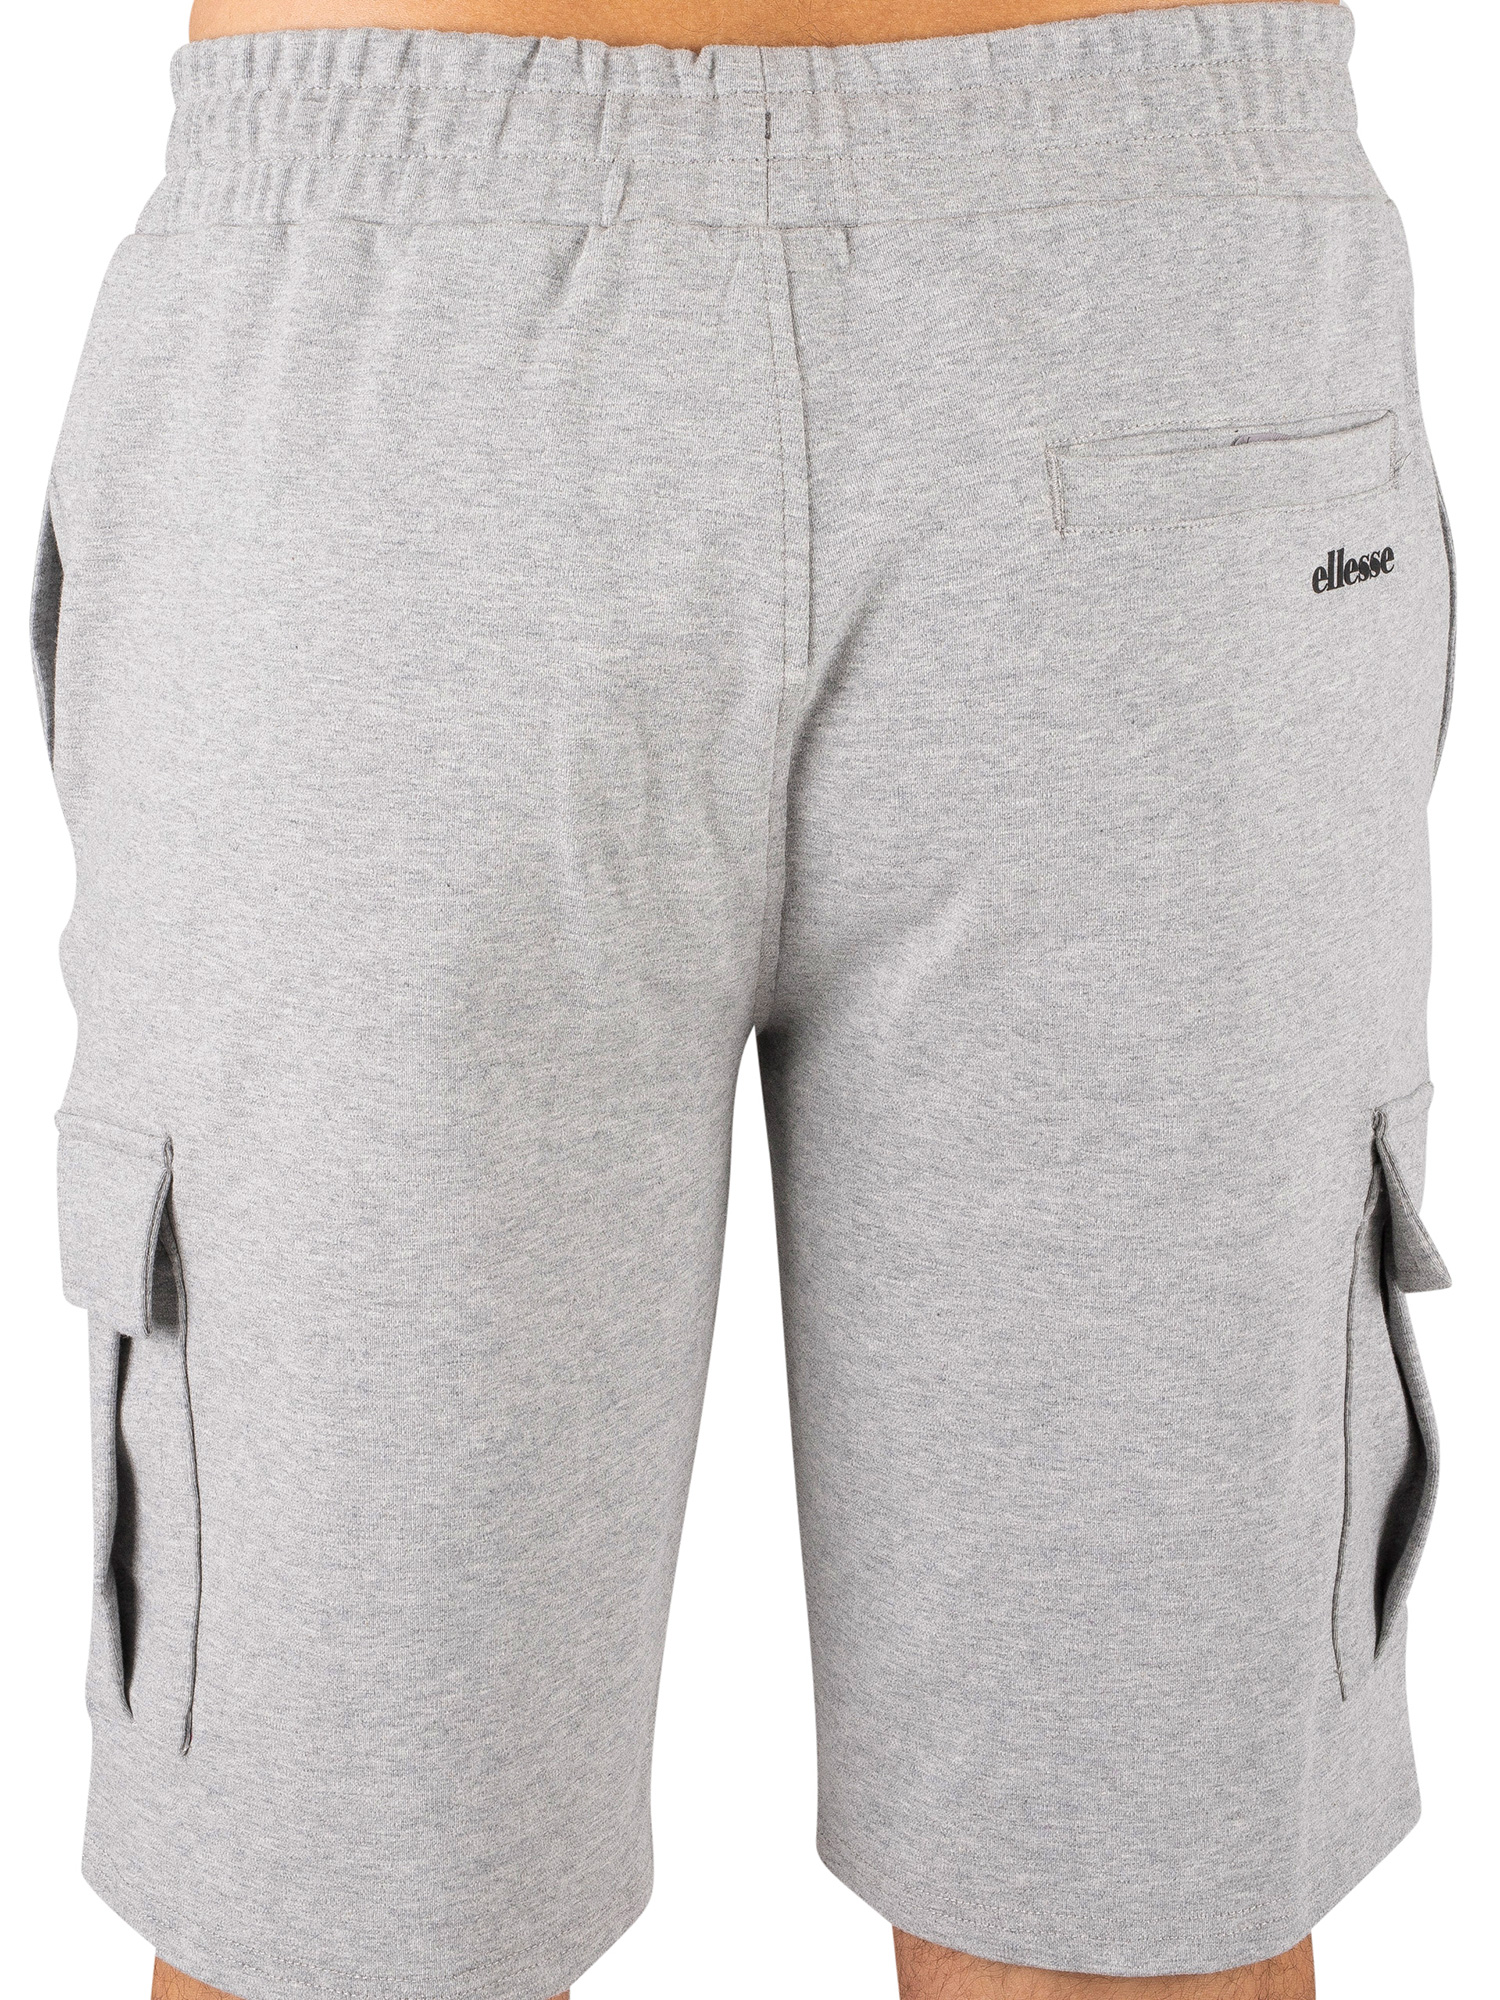 for Men Ellesse Panason Cargo Shorts in Grey Marl Mens Clothing Shorts Cargo shorts Grey 